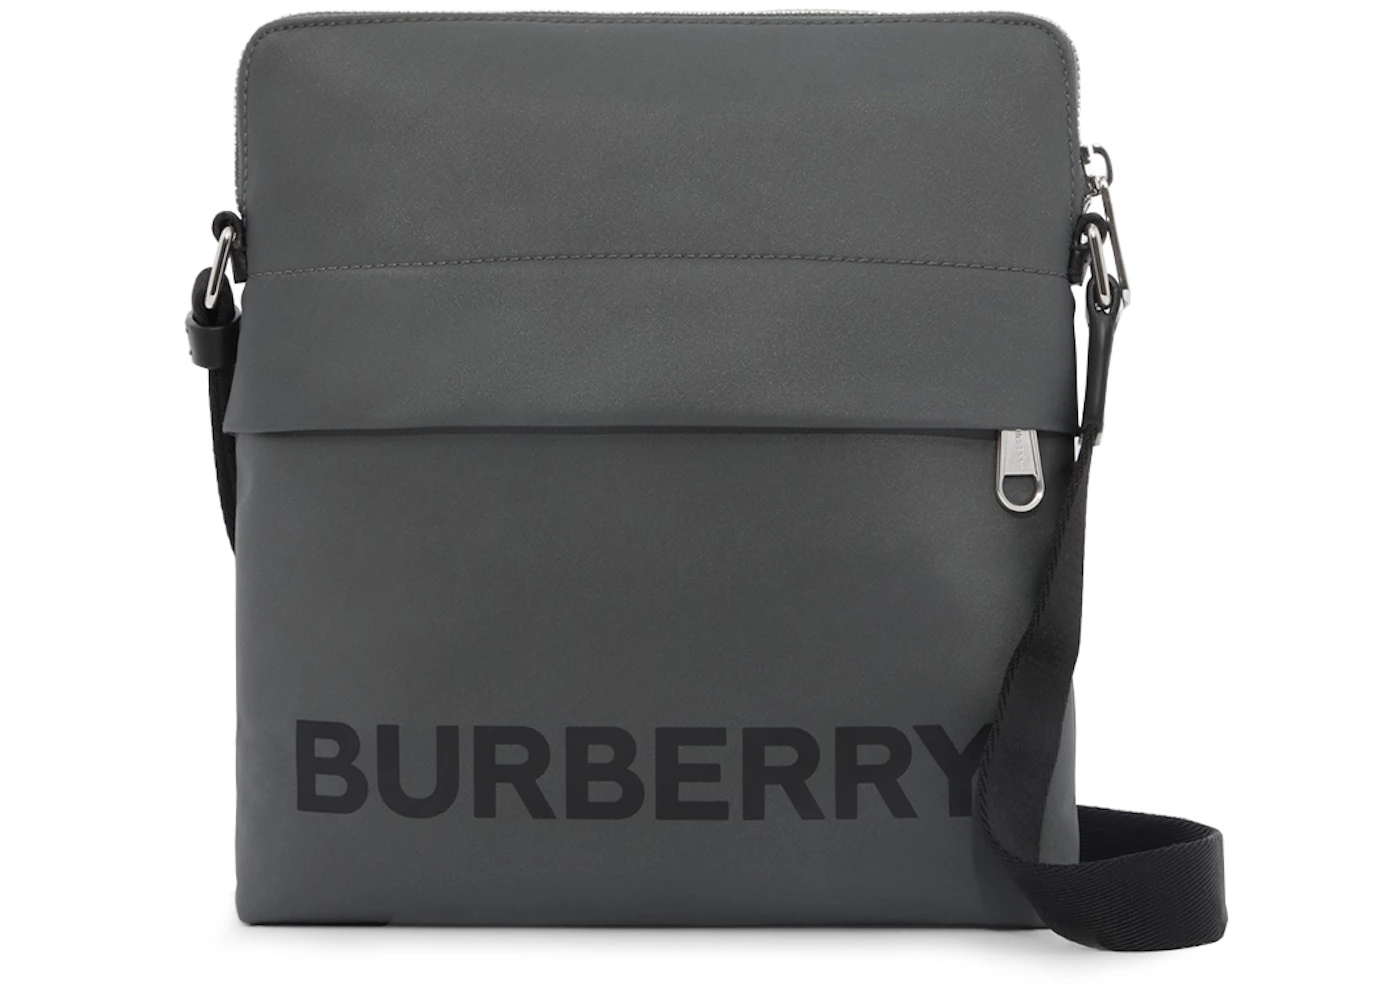 Burberry Logo Print Nylon Crossbody Bag Charcoal Gray in Nylon with ...